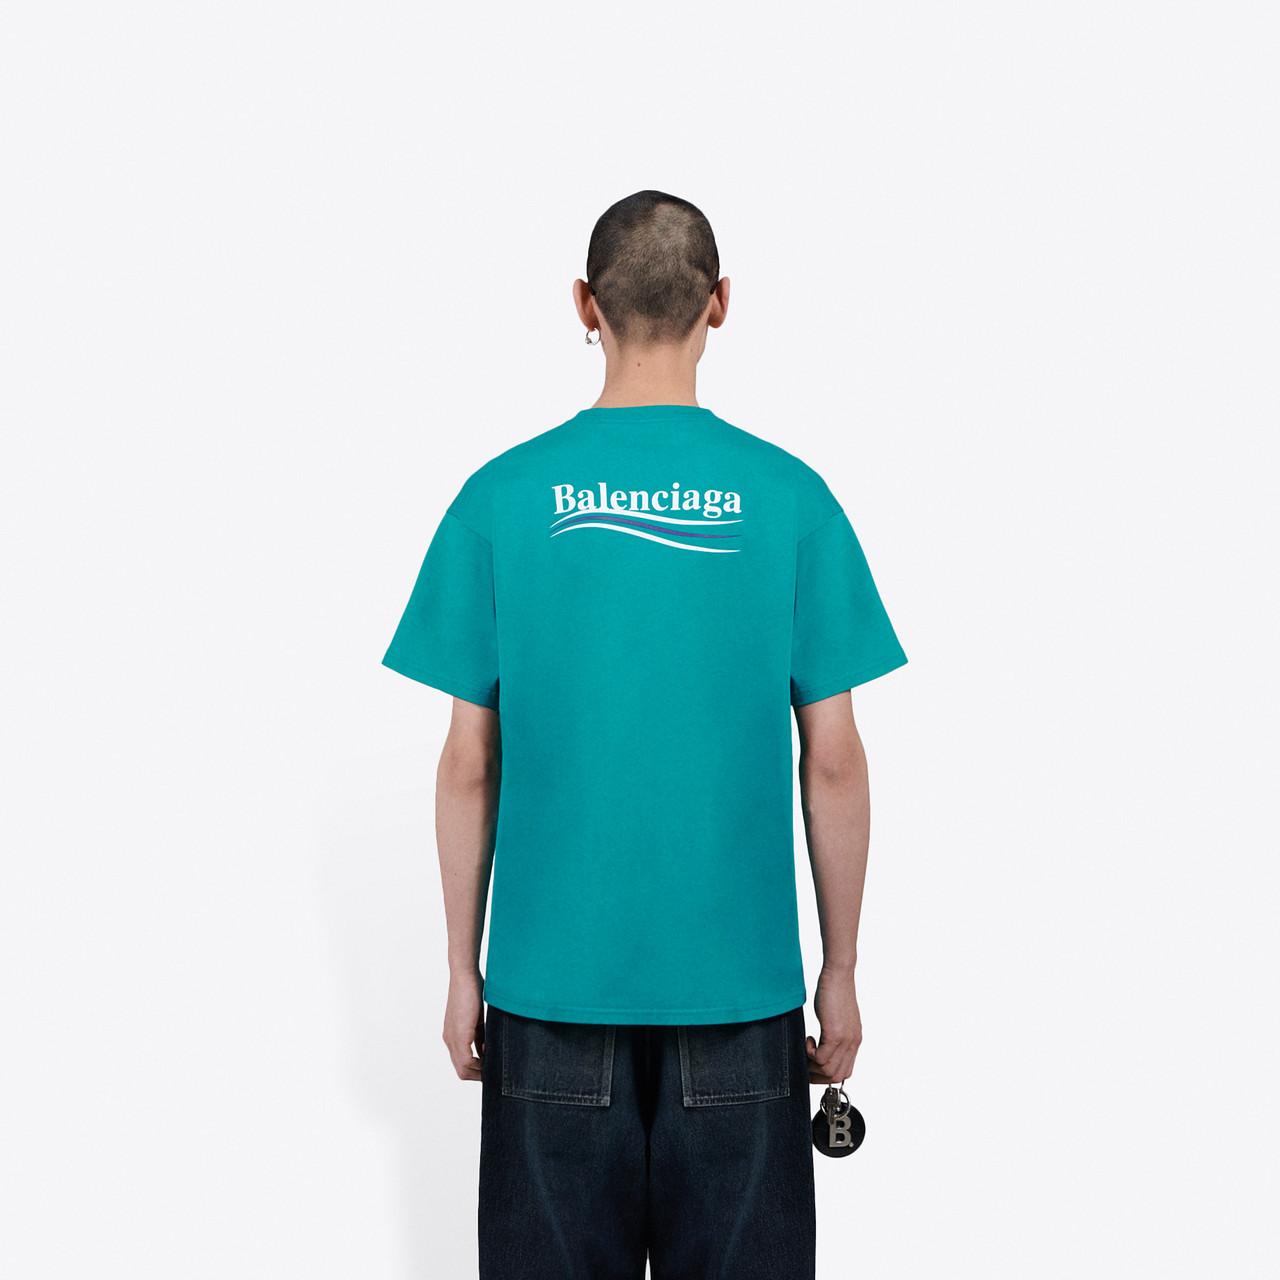 Balenciaga Cotton Political Campaign Regular Fit T-shirt in Emerald (Green)  for Men - Lyst